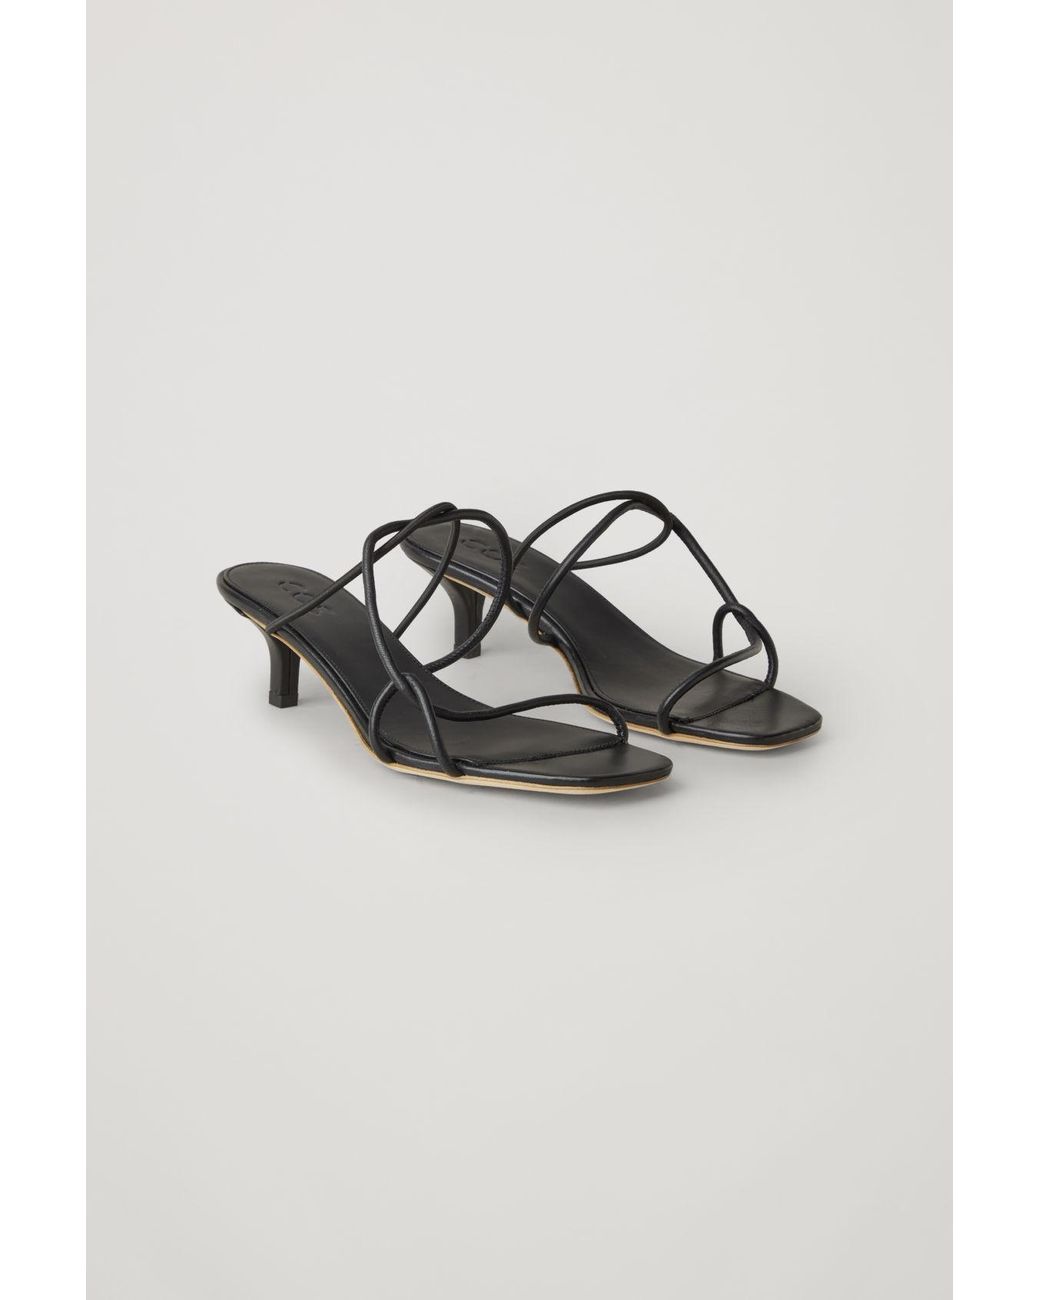 COS Strappy Leather Kitten-heel Sandals in Black | Lyst